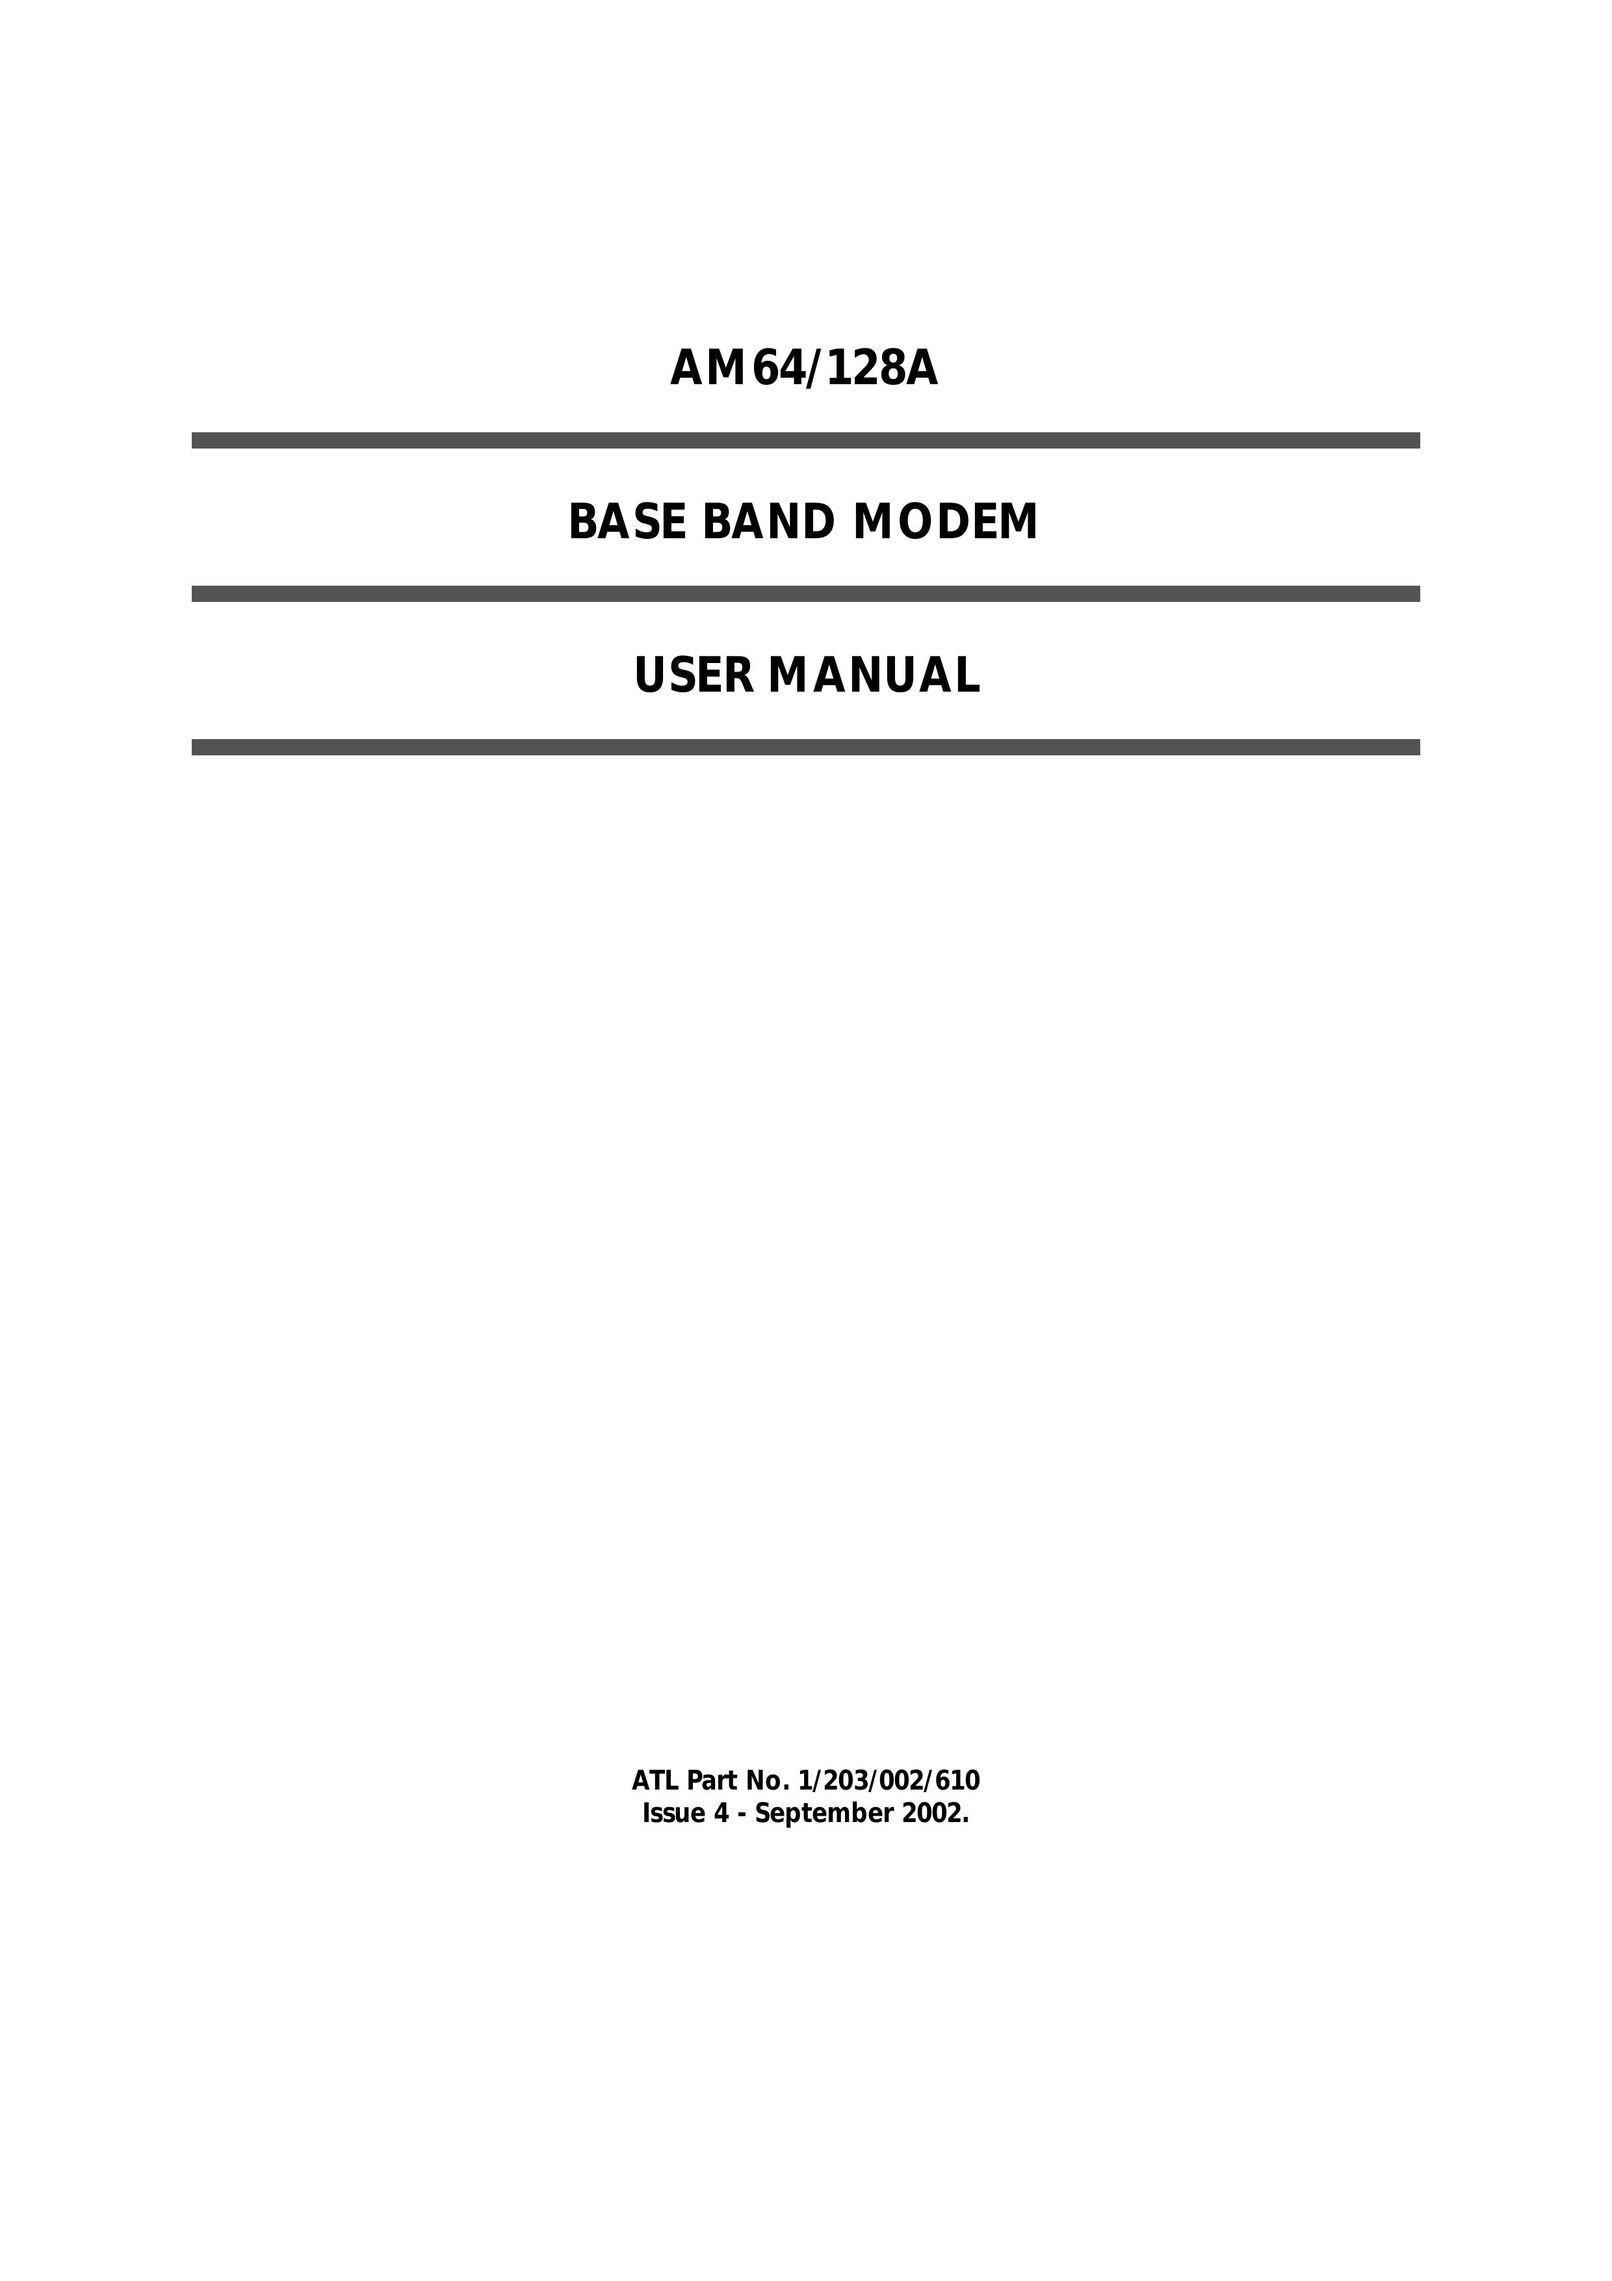 American Telecom AM64/128A Modem User Manual